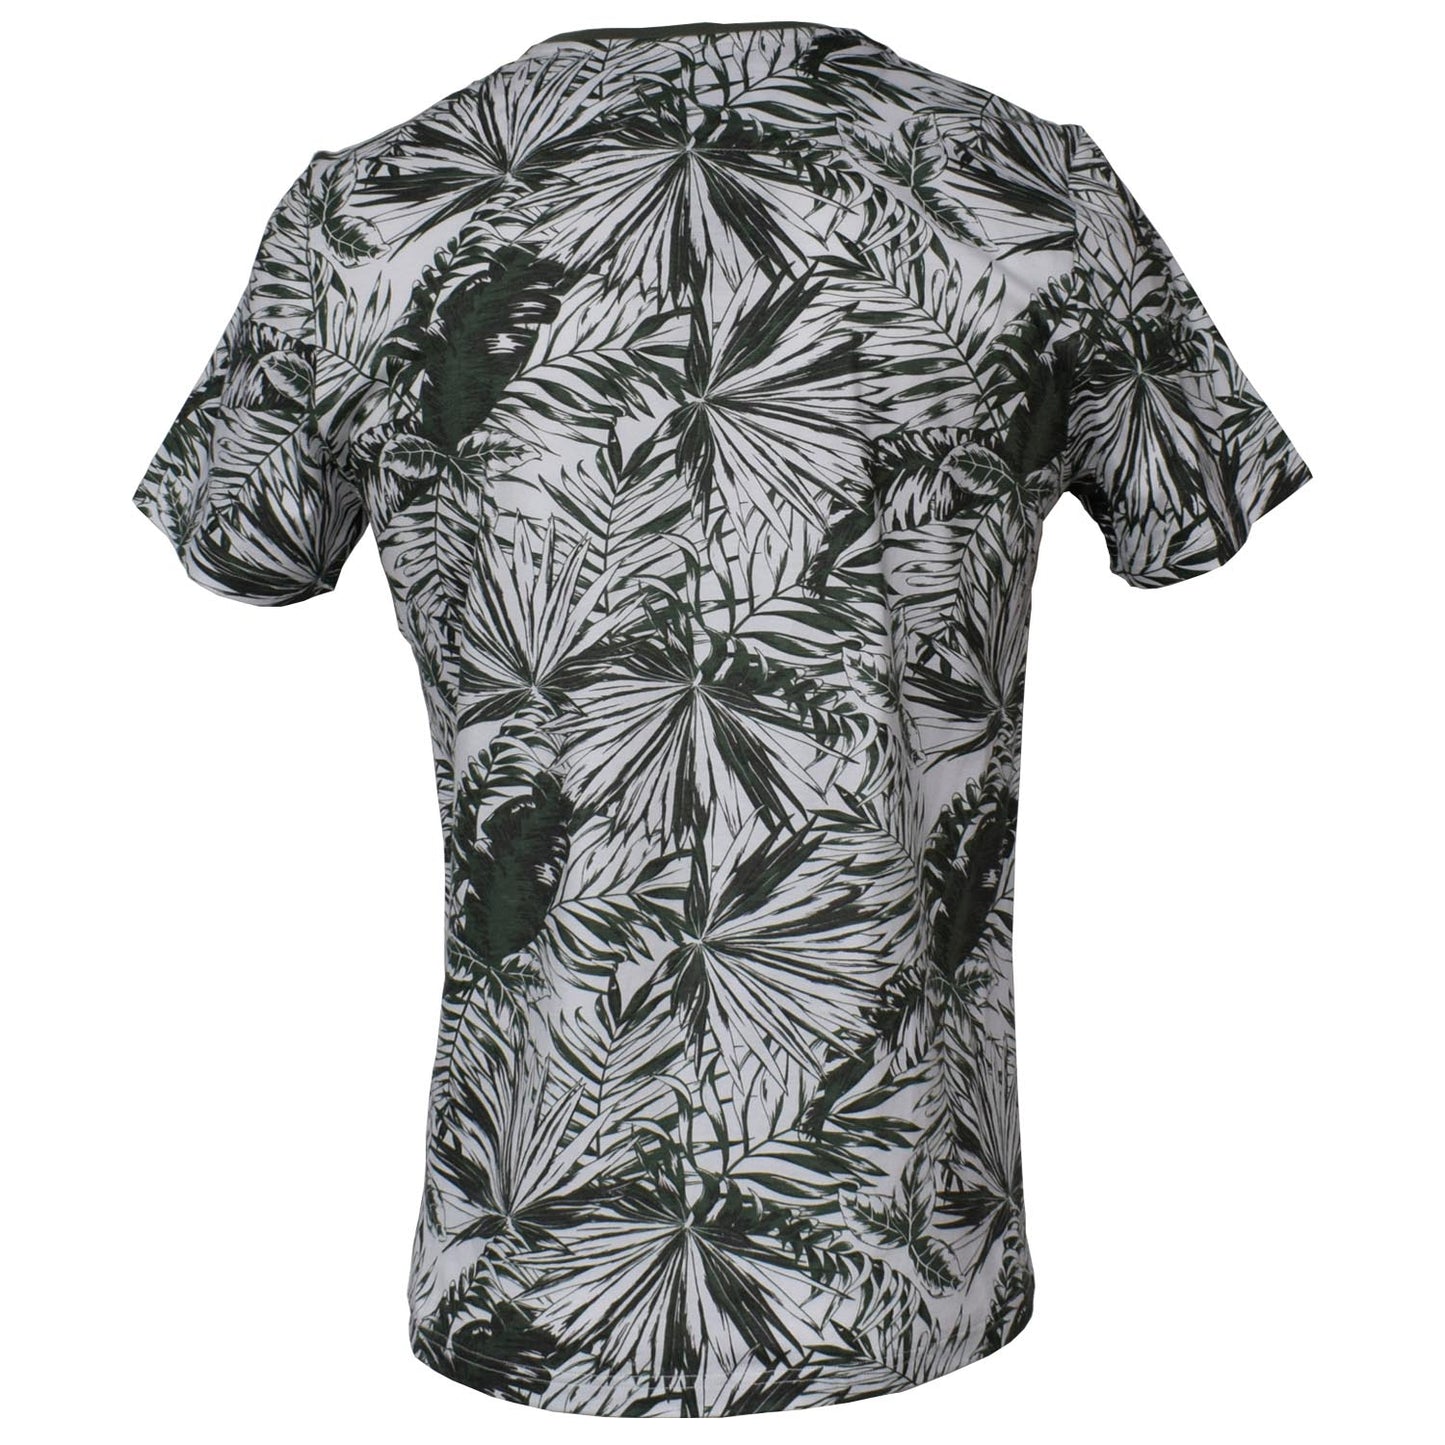 Outrage - All Over Print Tropical Kayden T-Shirt - LabelledUp.com